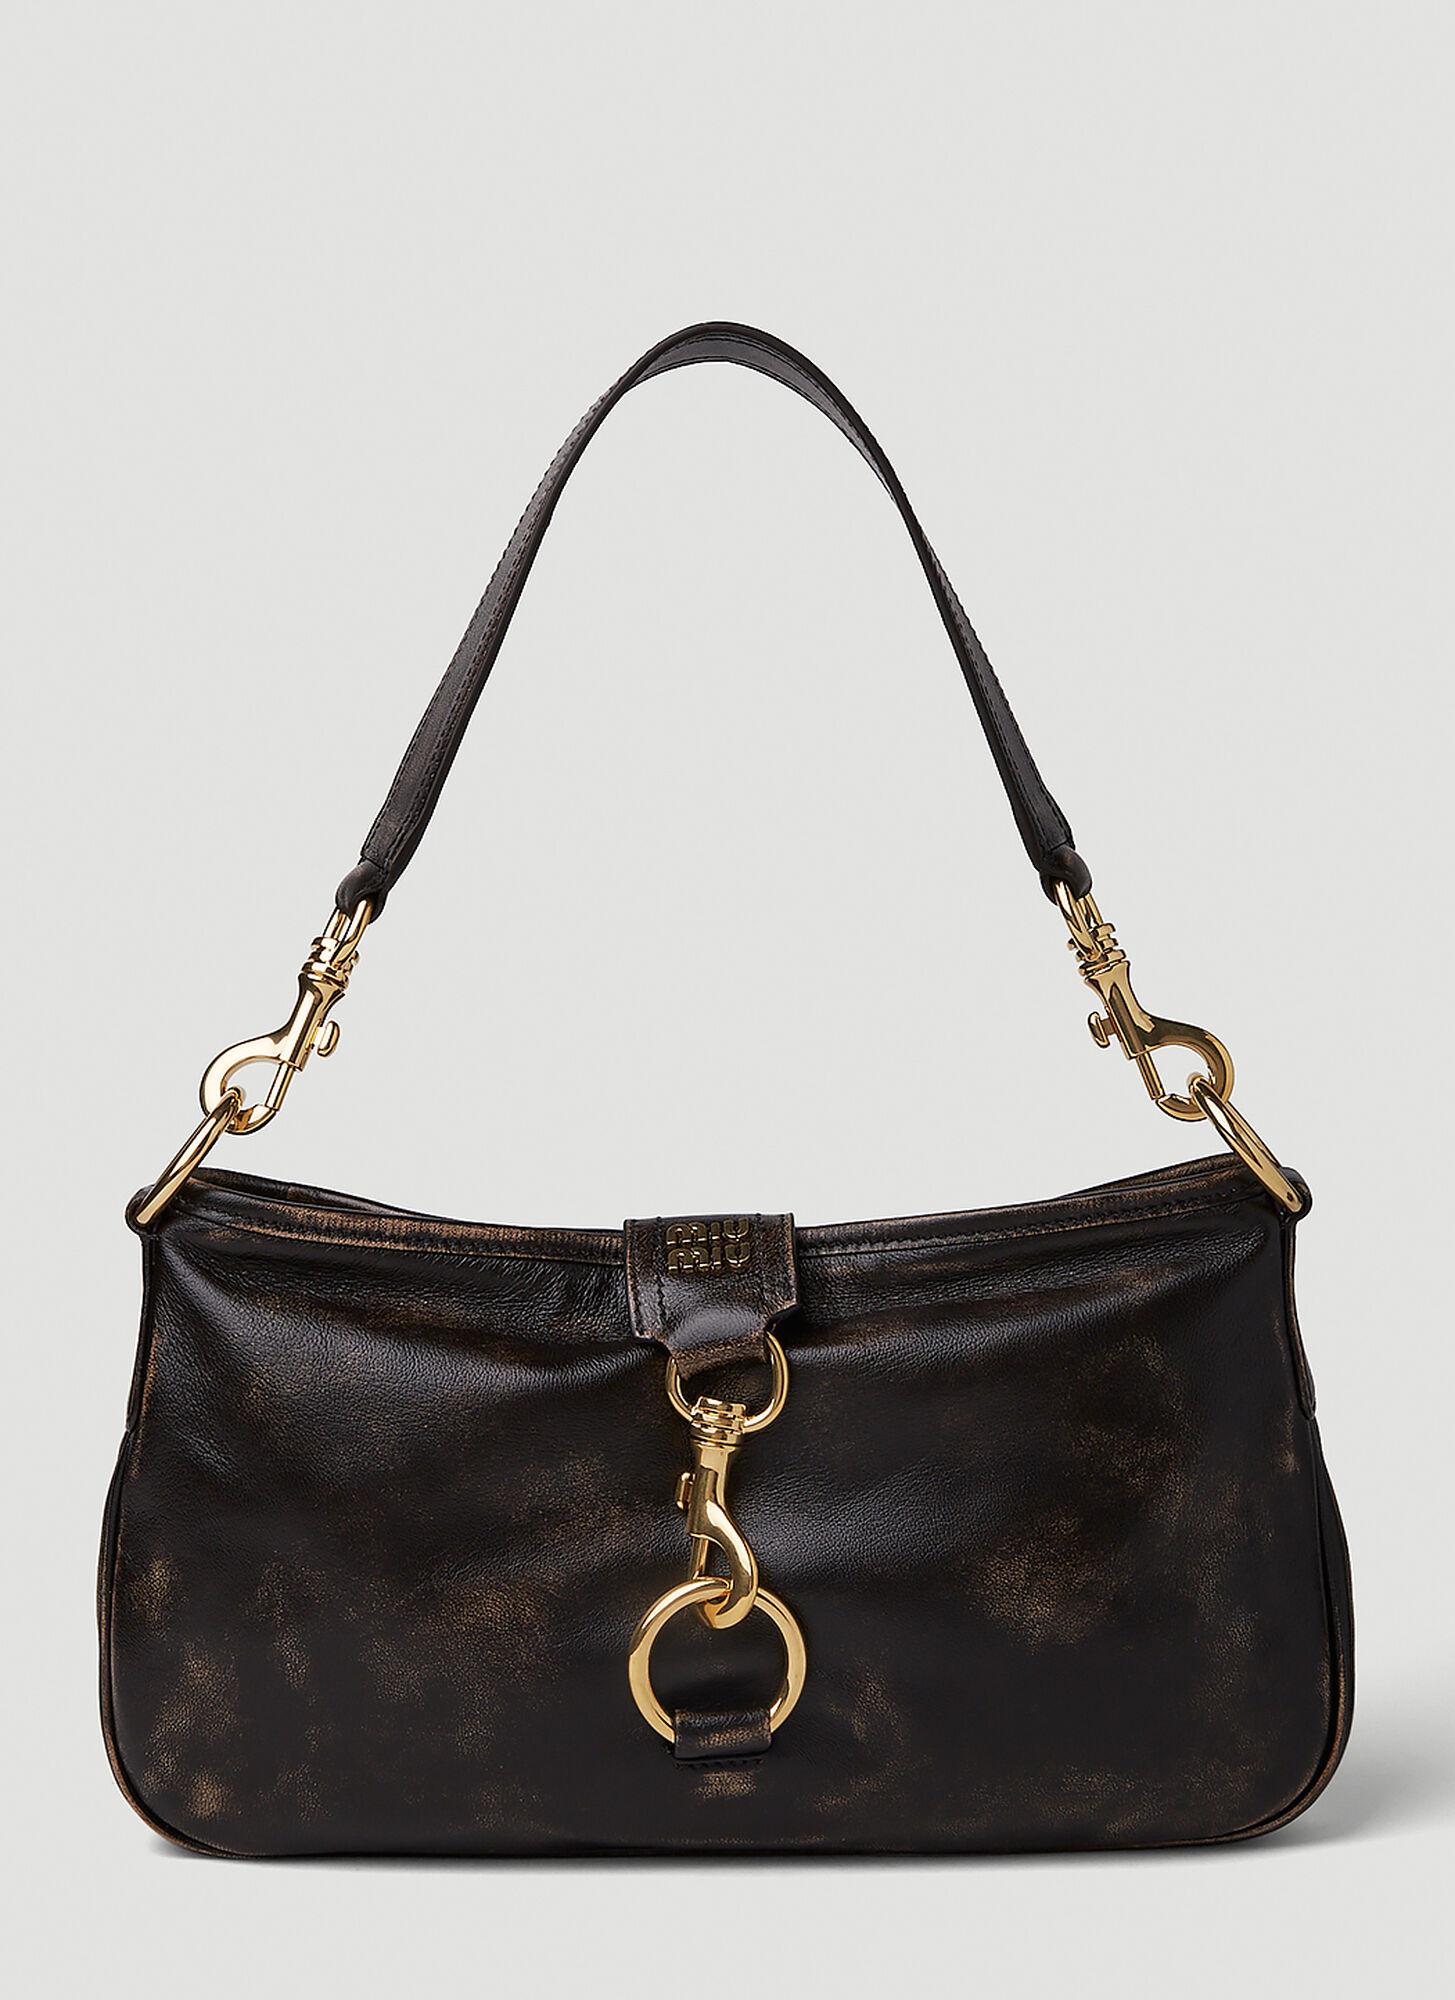 Miu Miu Powder Pink Nappa Leather Handbag in Brown | Lyst